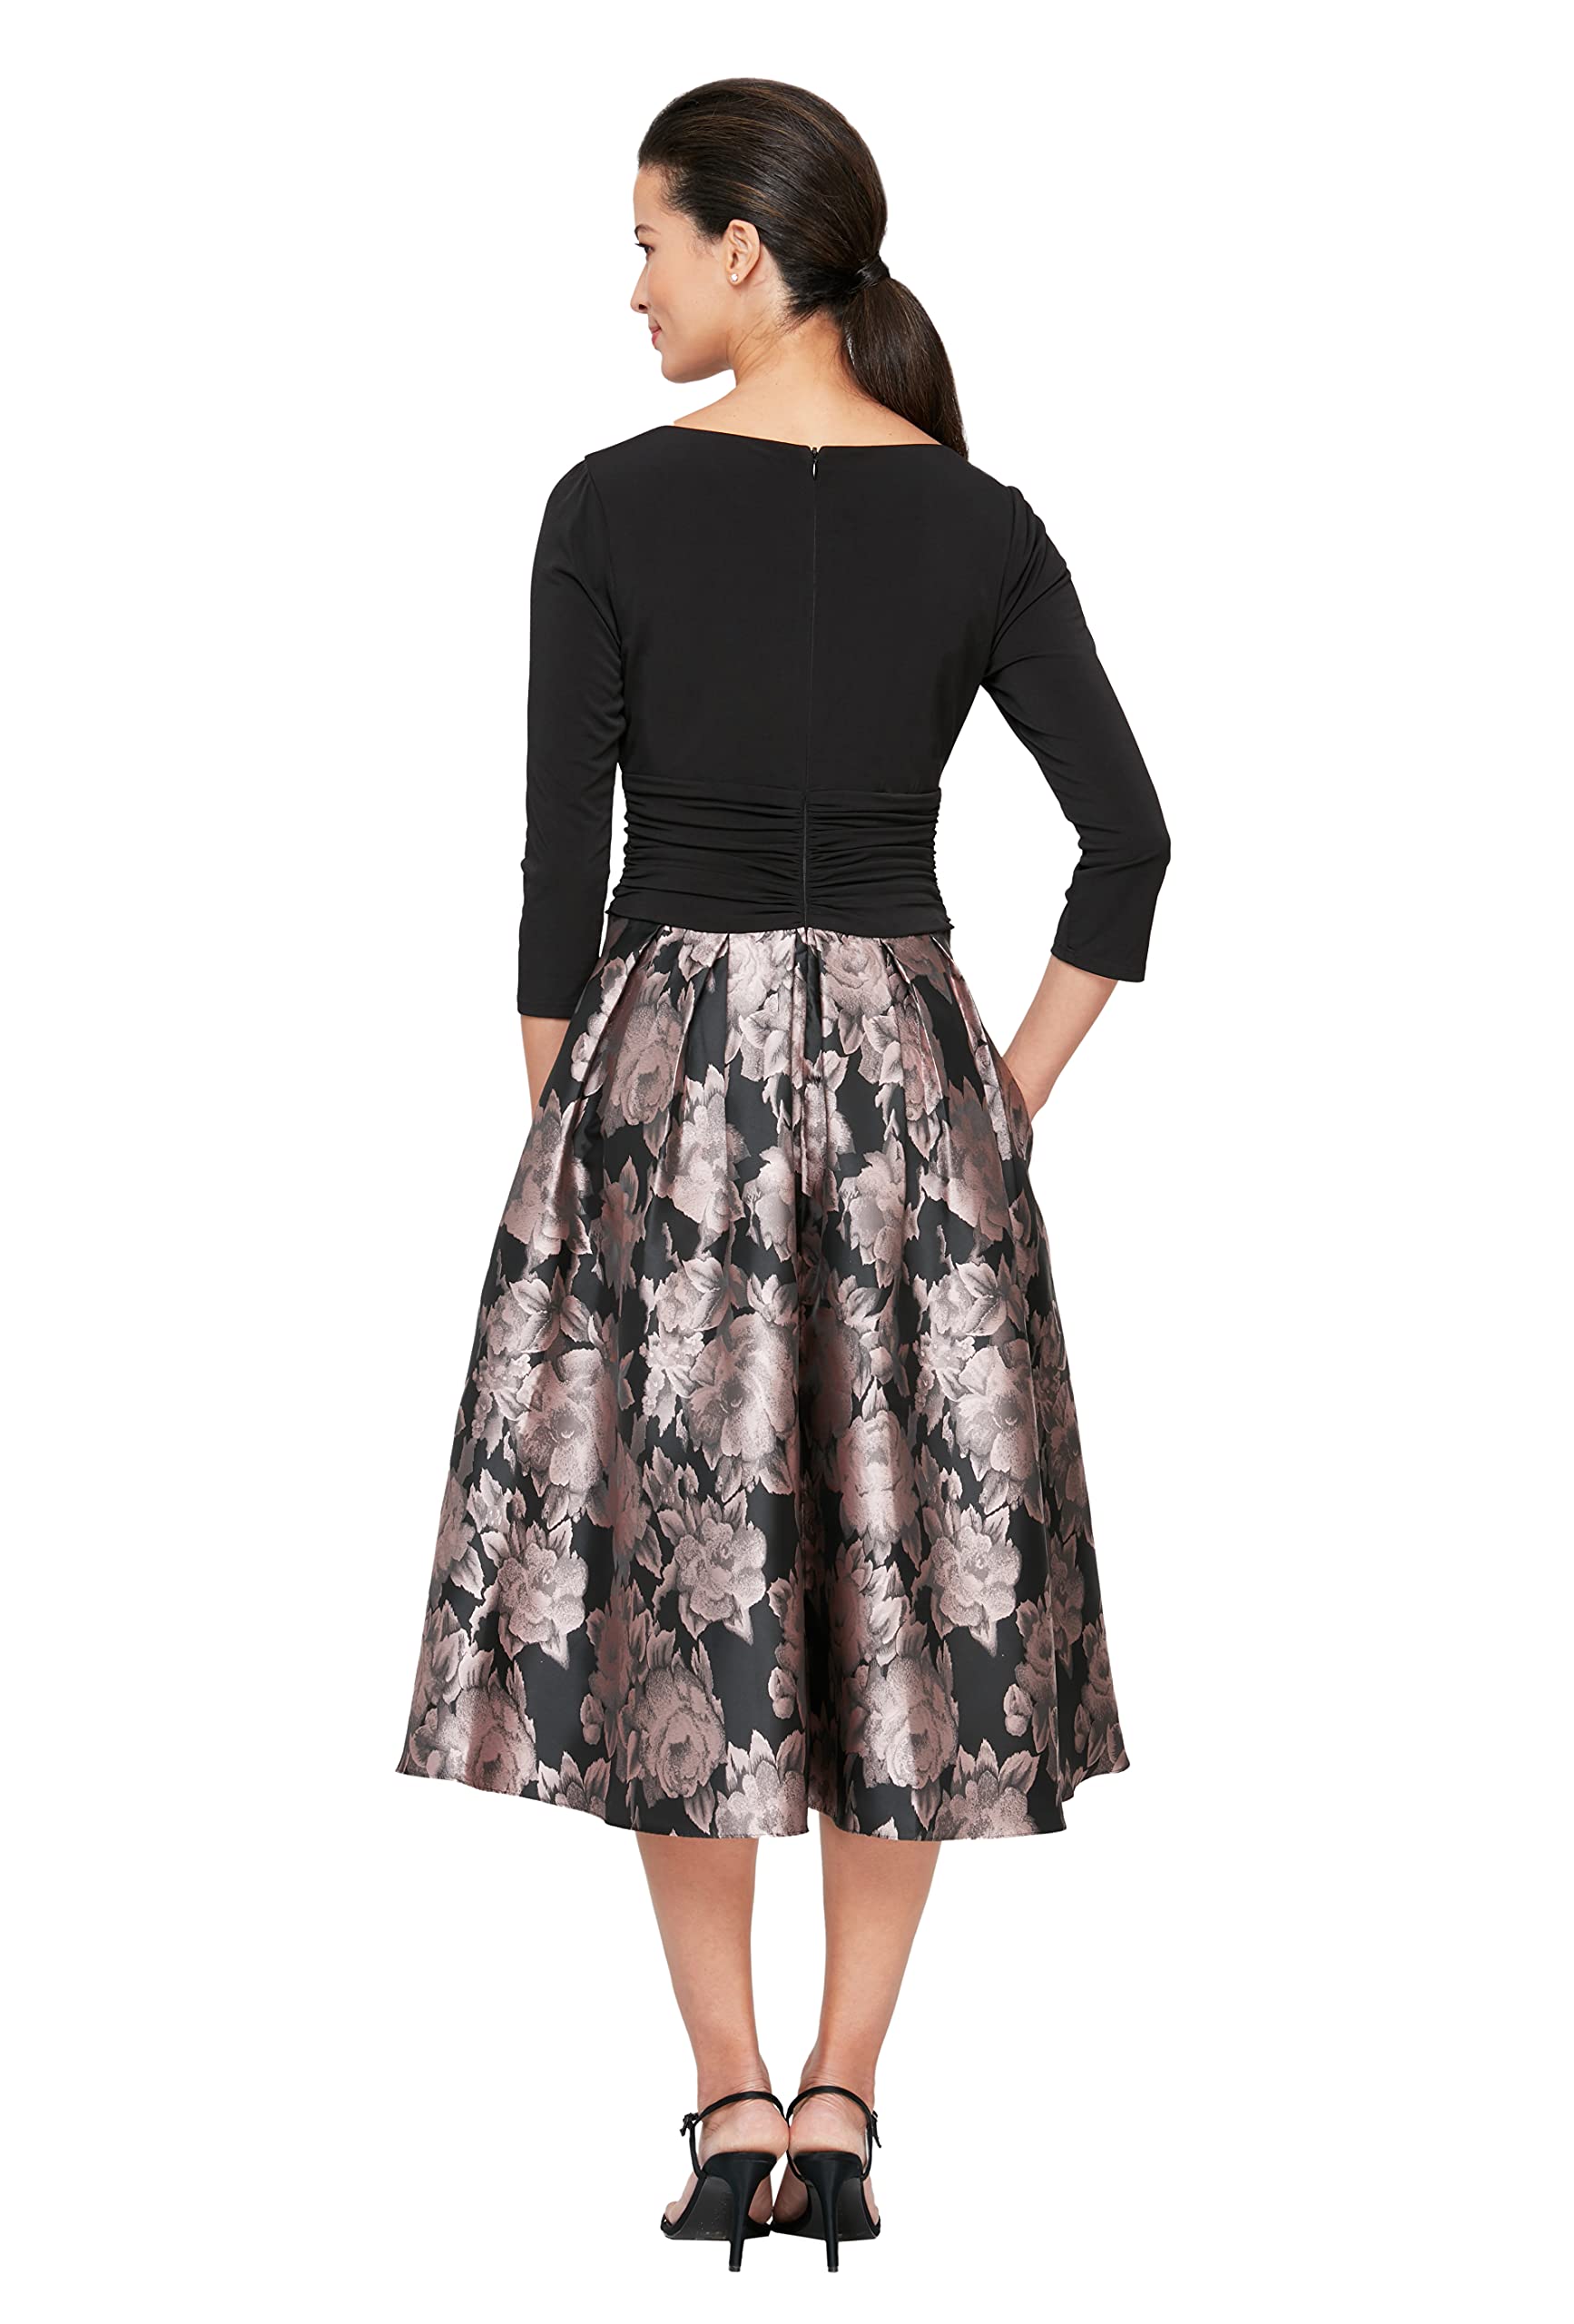 S.L. Fashions Women's Stretch Jersey Bodice Jacquard Floral Print Dress